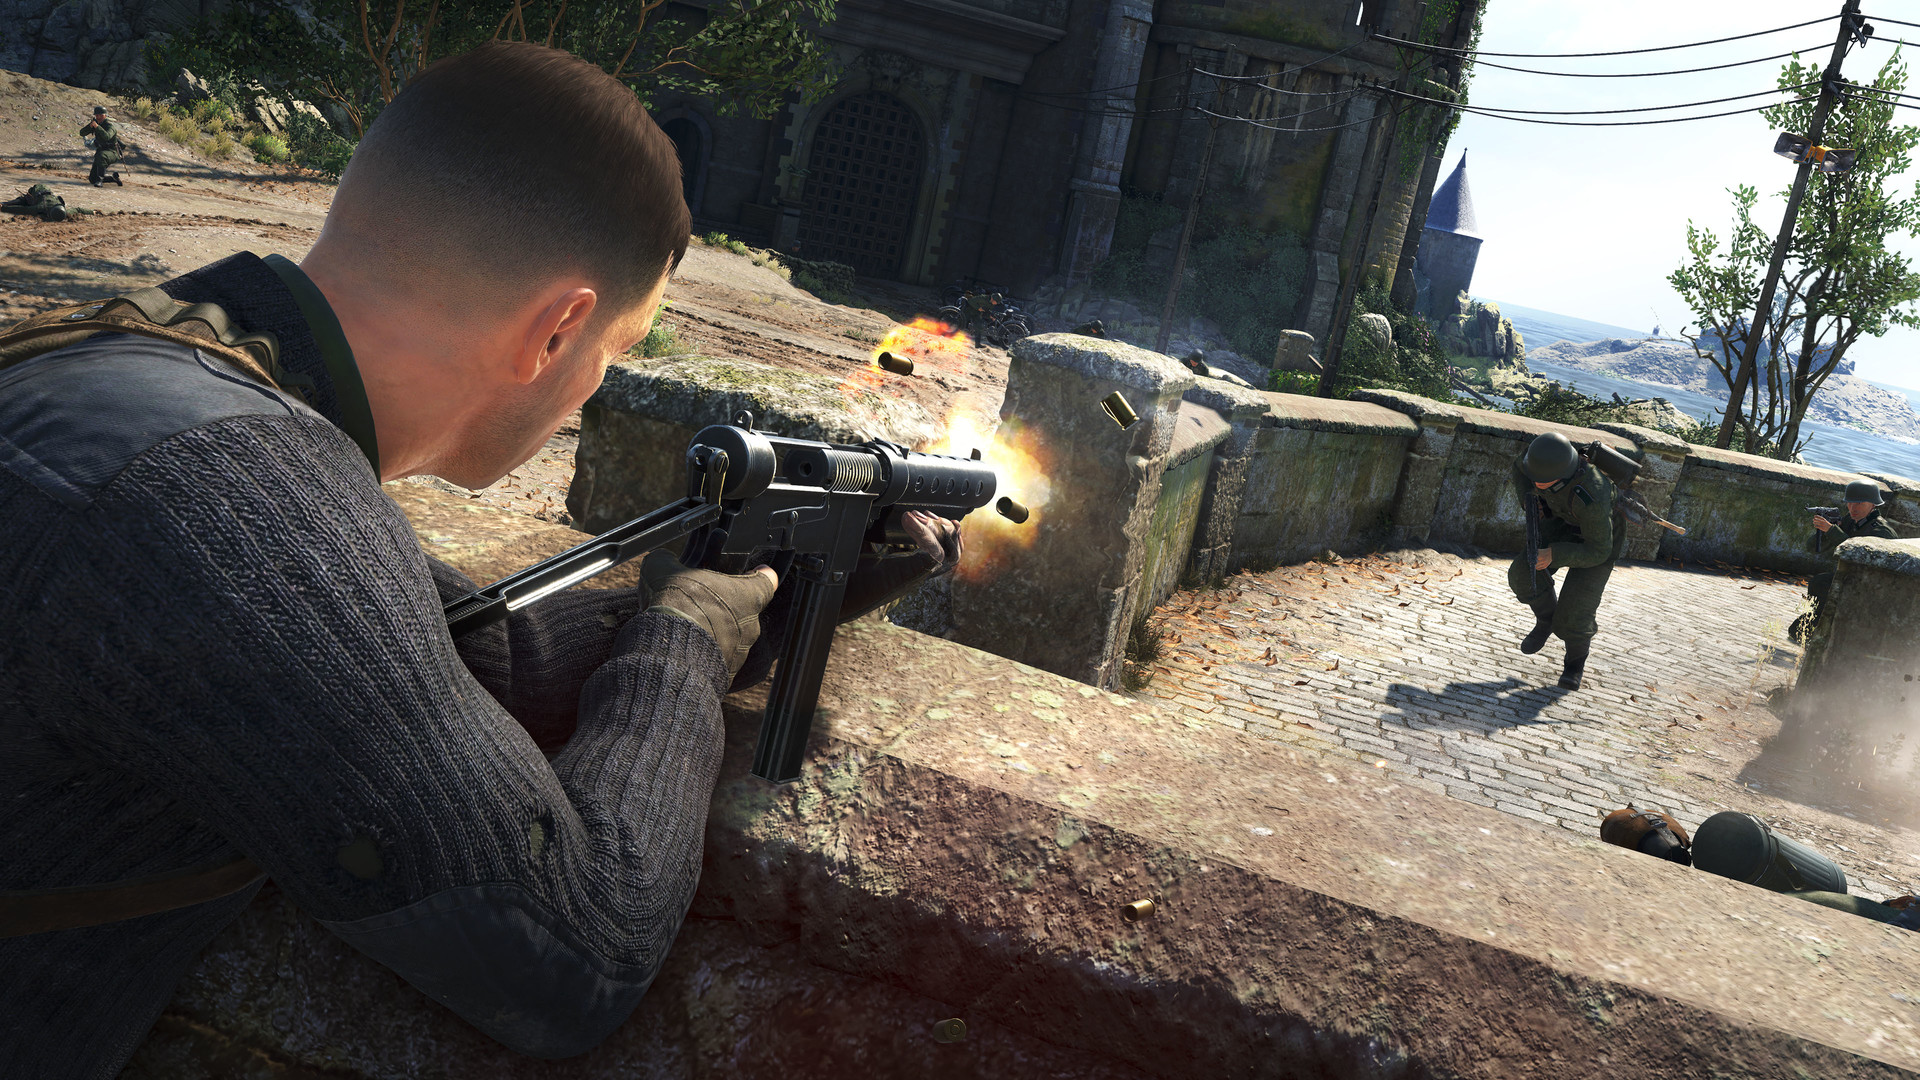 Sniper Elite 5 PlayStation 4 Account